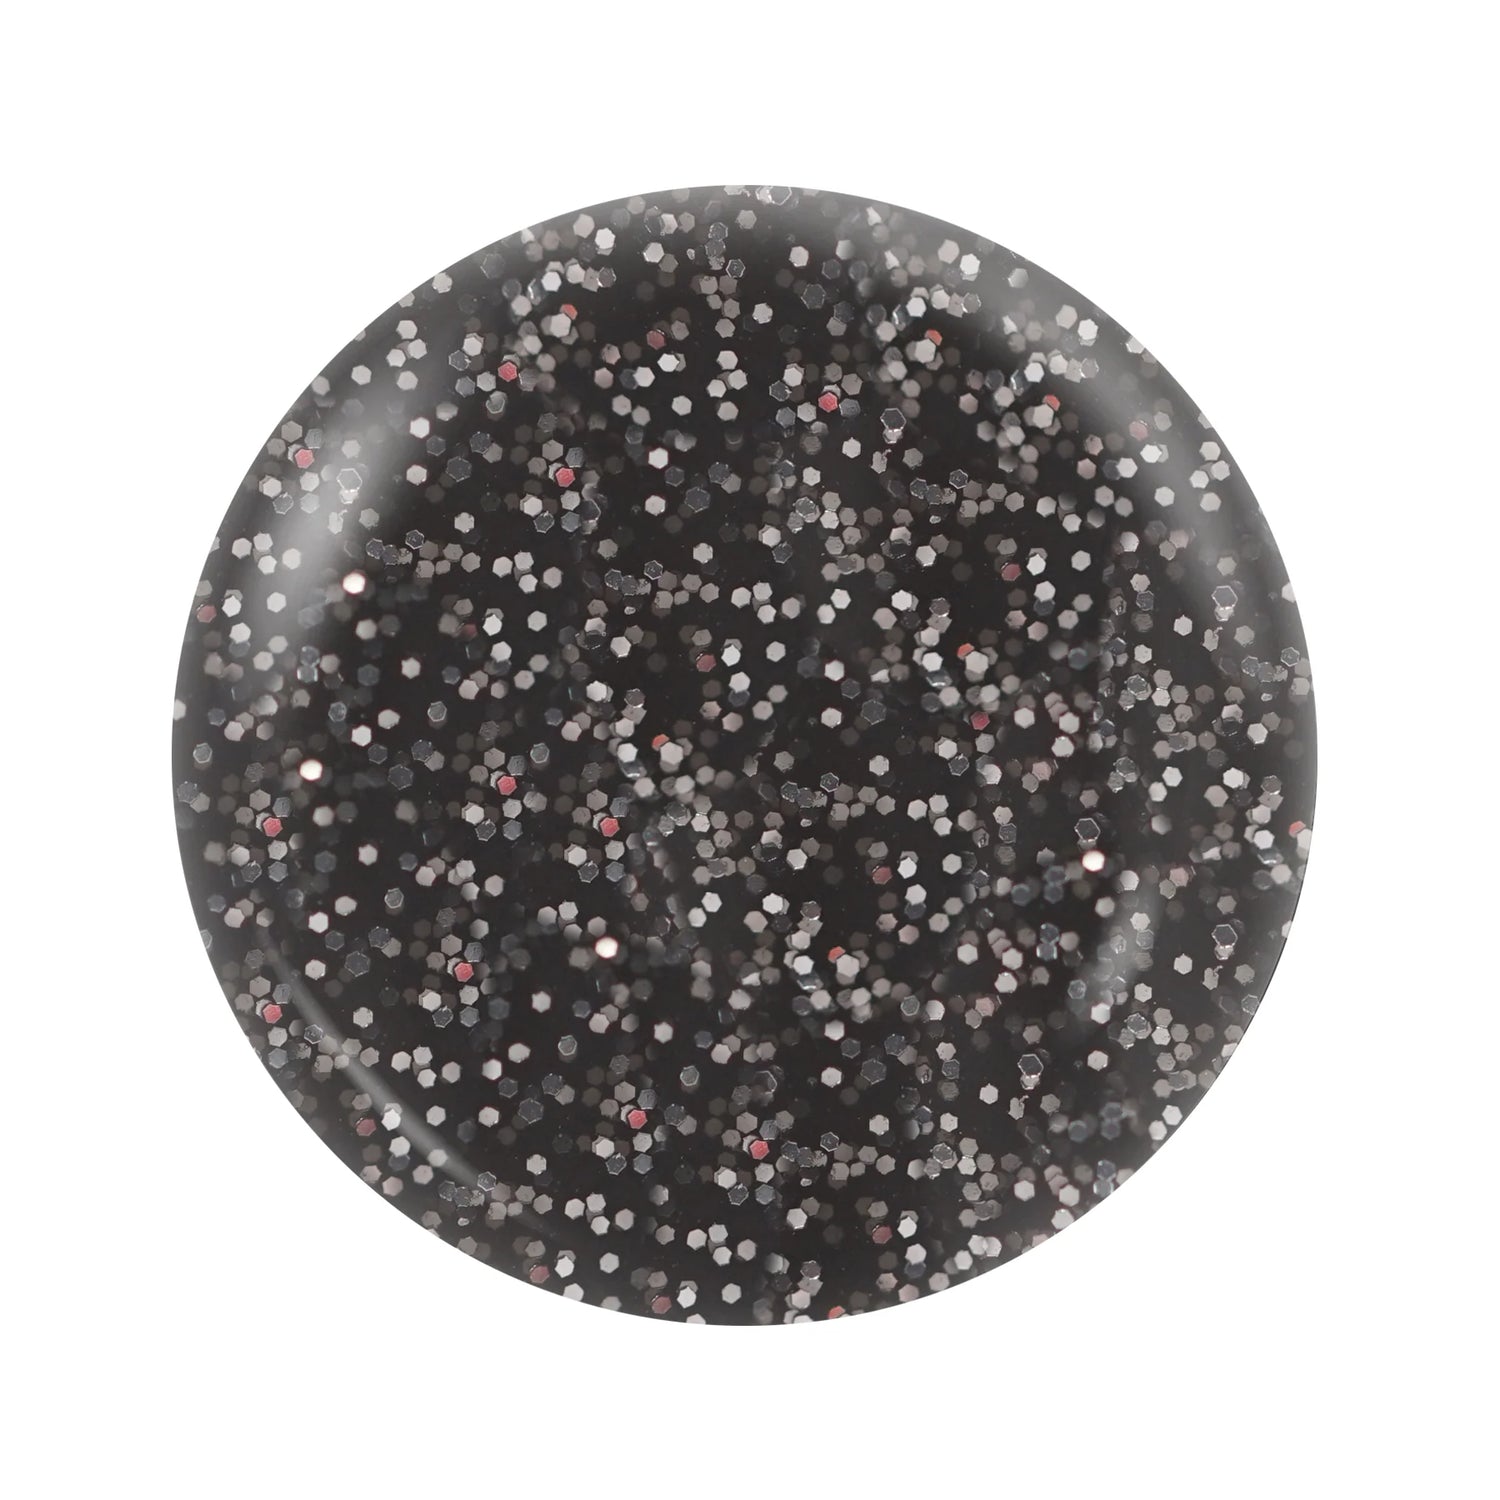 OG 193 - Notpolish Black Diamond